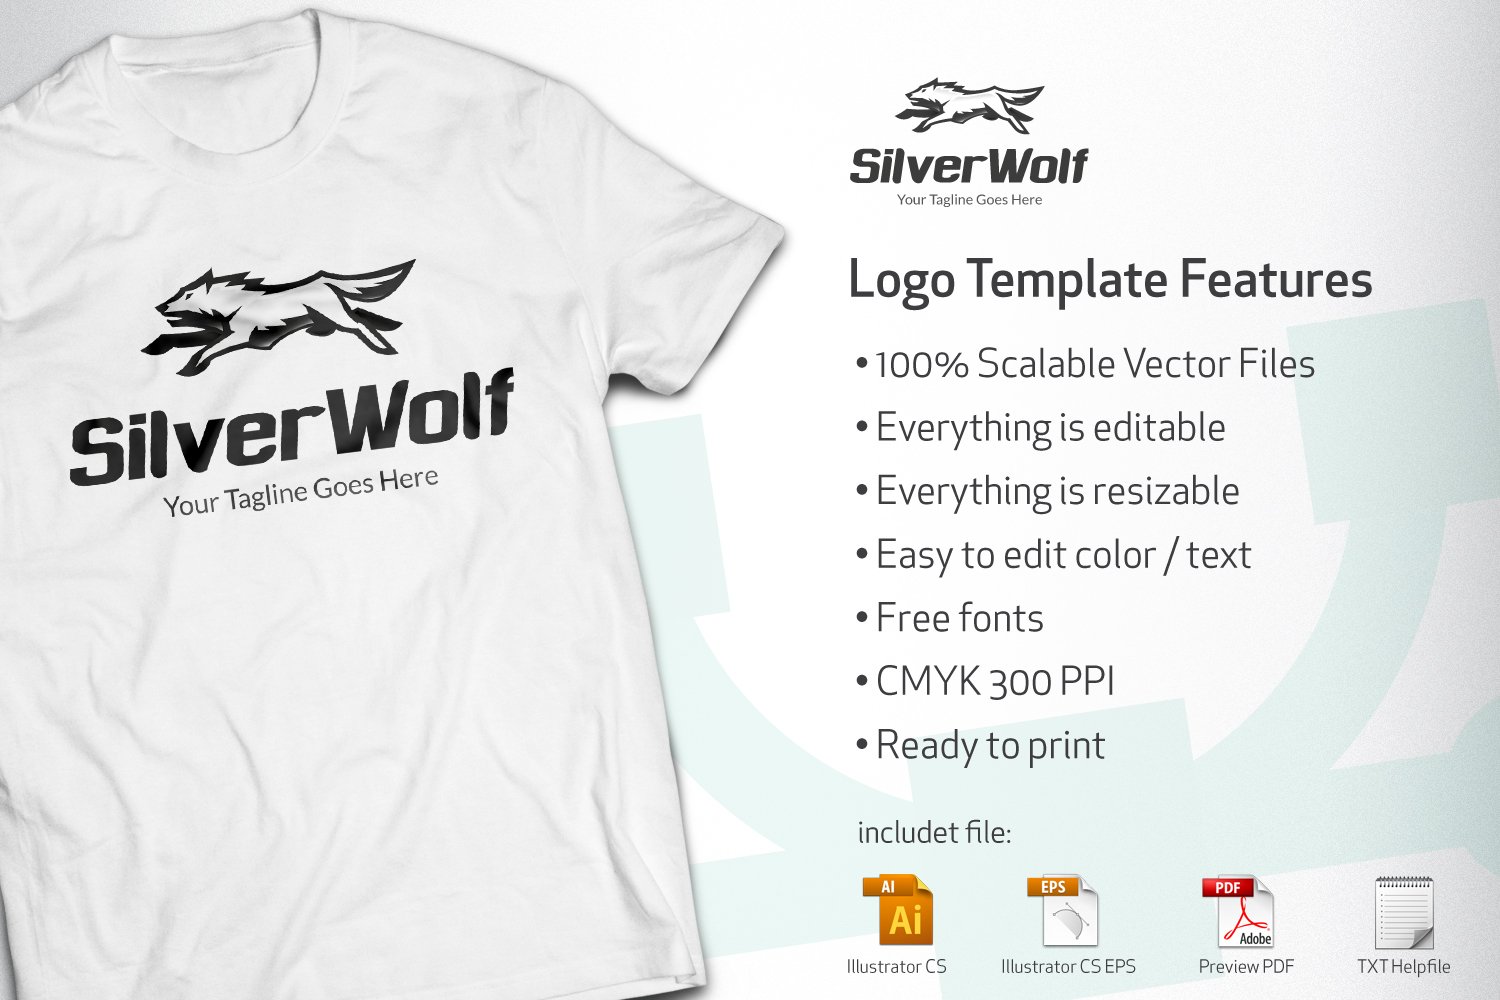 silverwolf logo preview image.